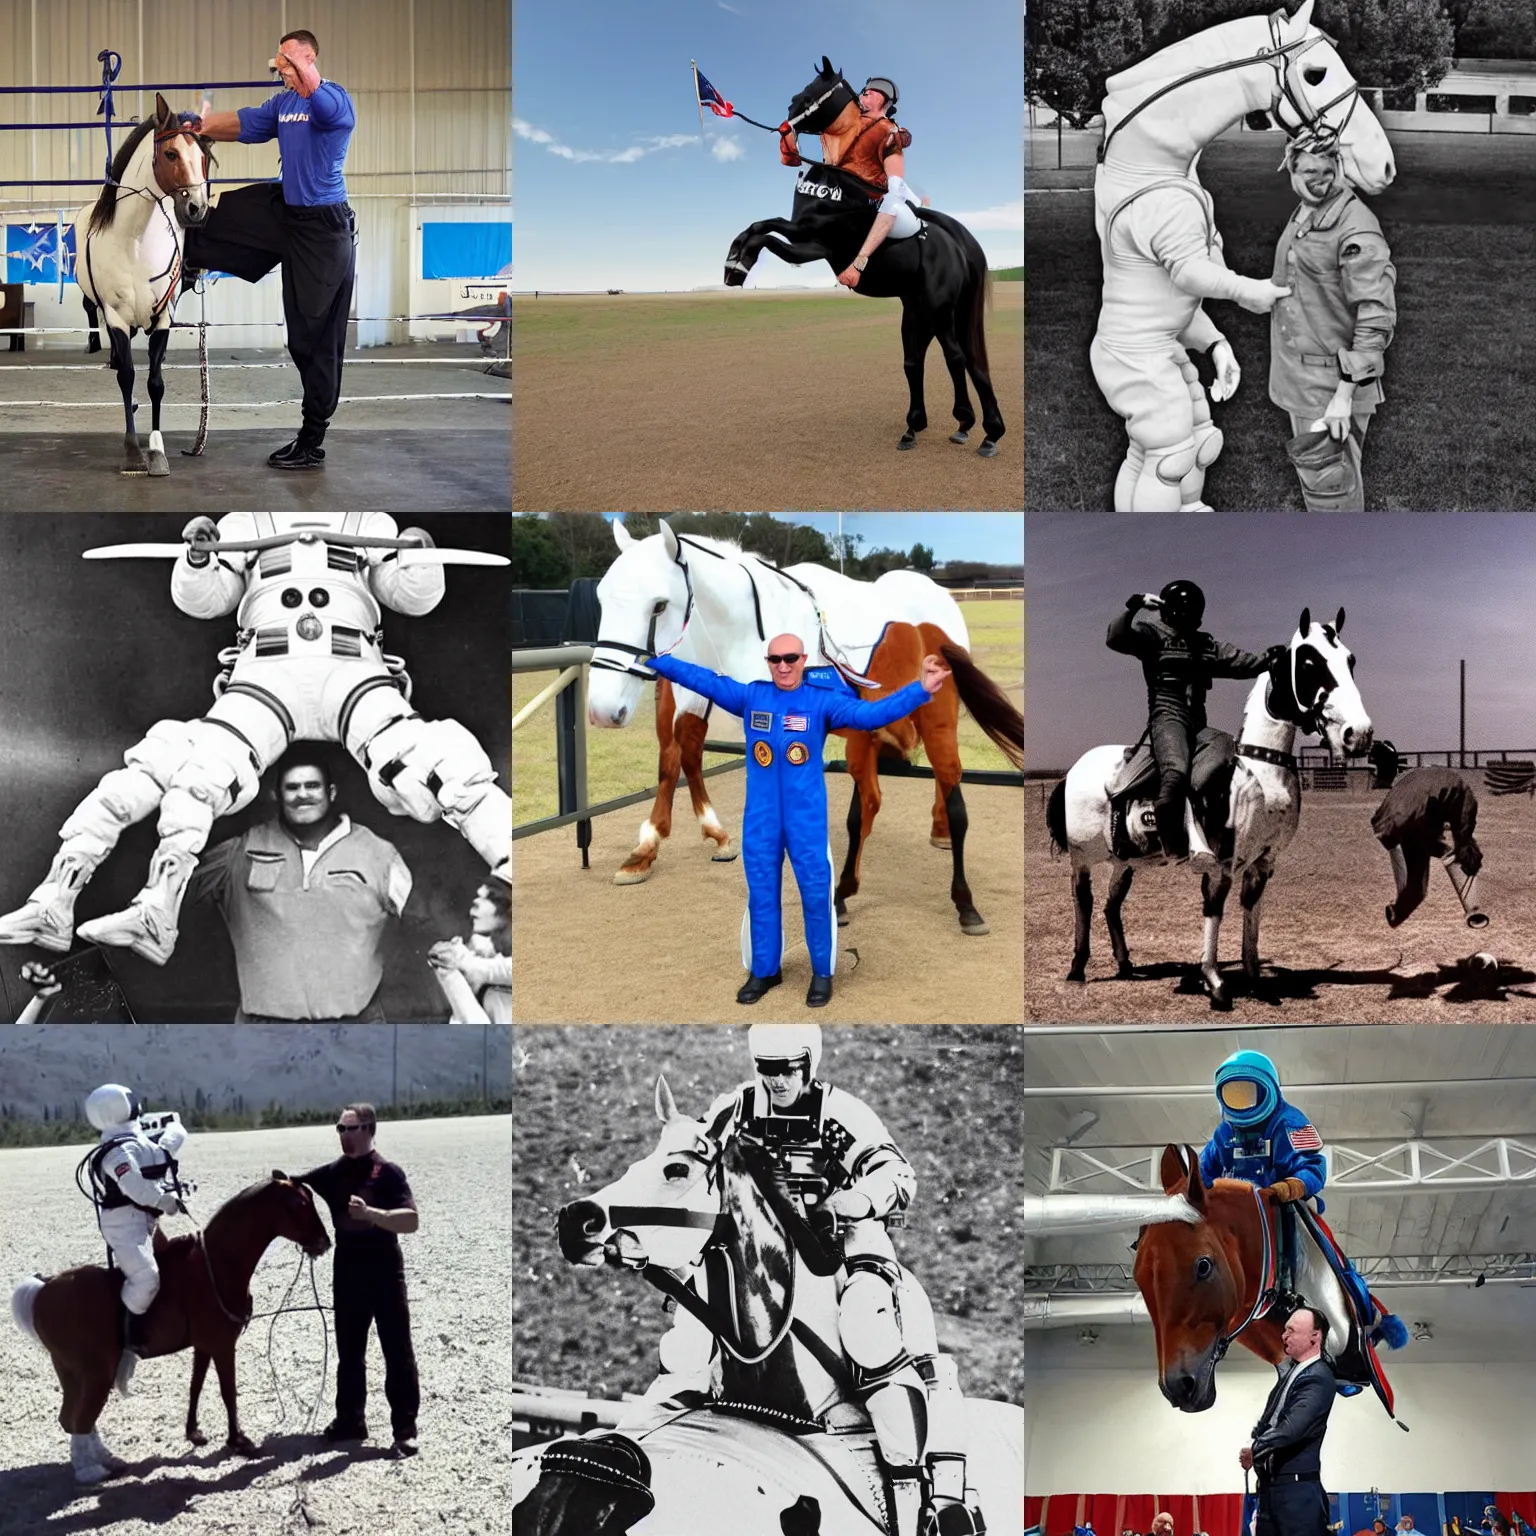 Prompt: strongman astronaut lifts horse